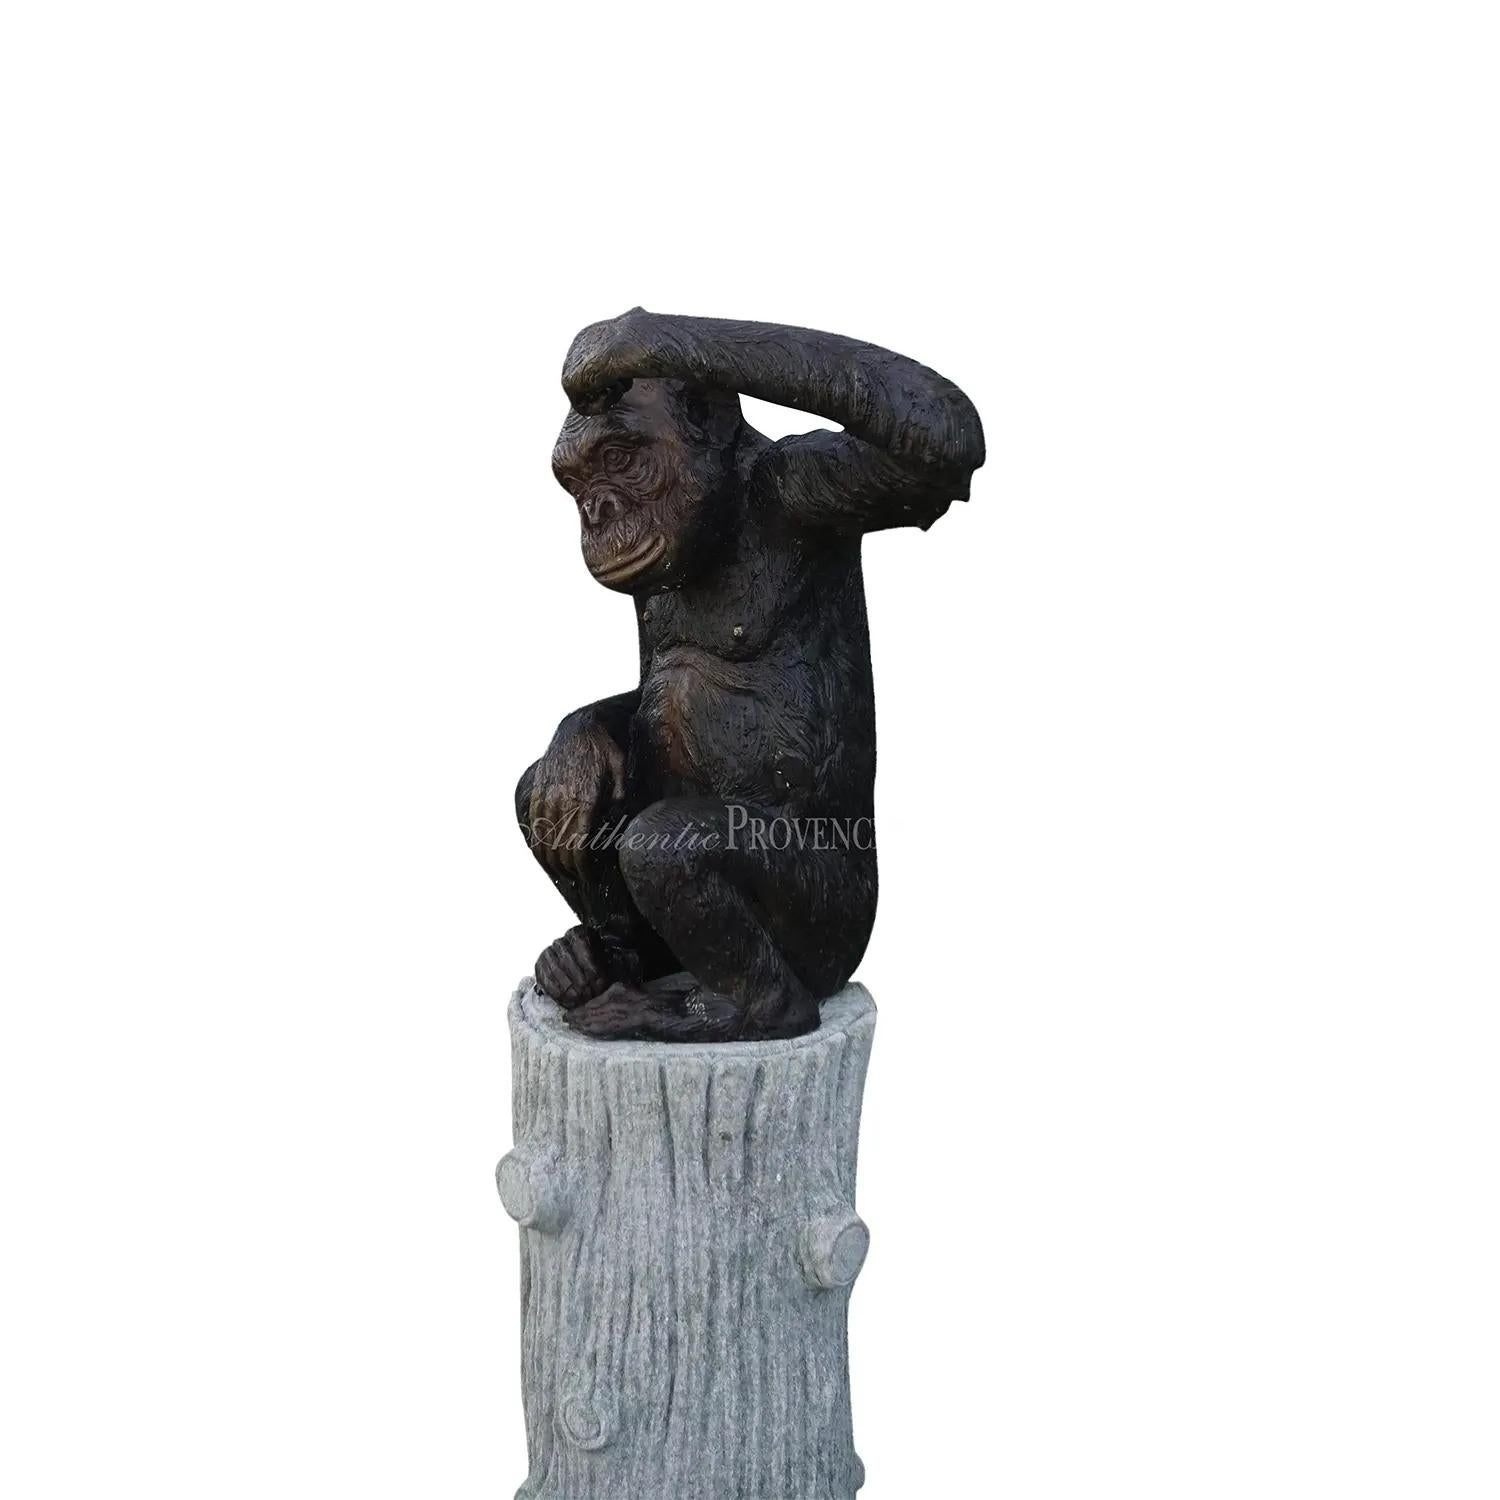 bronze monkey statue